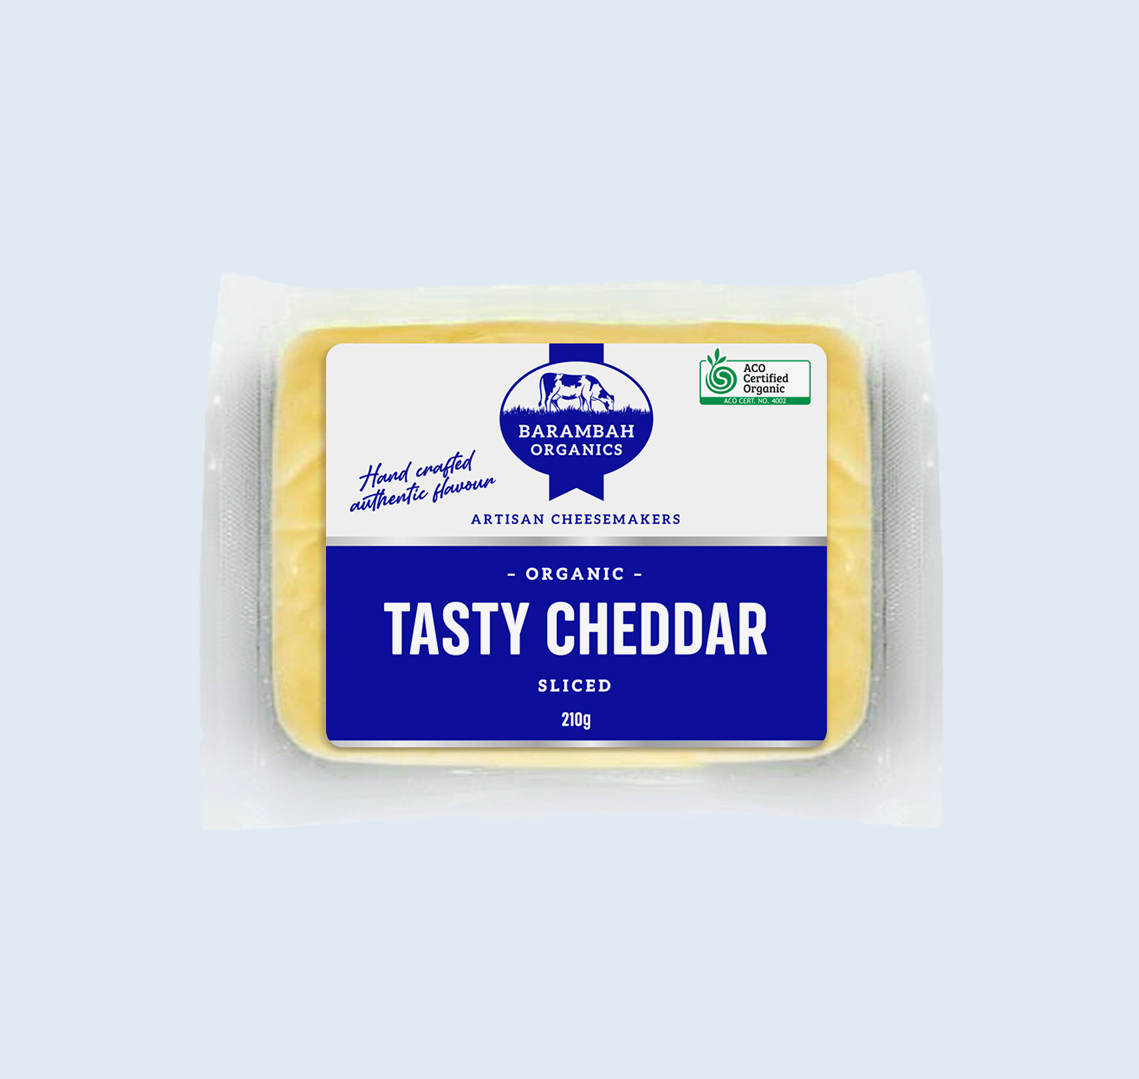 210g of Organic Tasty Cheddar - Organic Cheddar Cheese - Barambah Organics